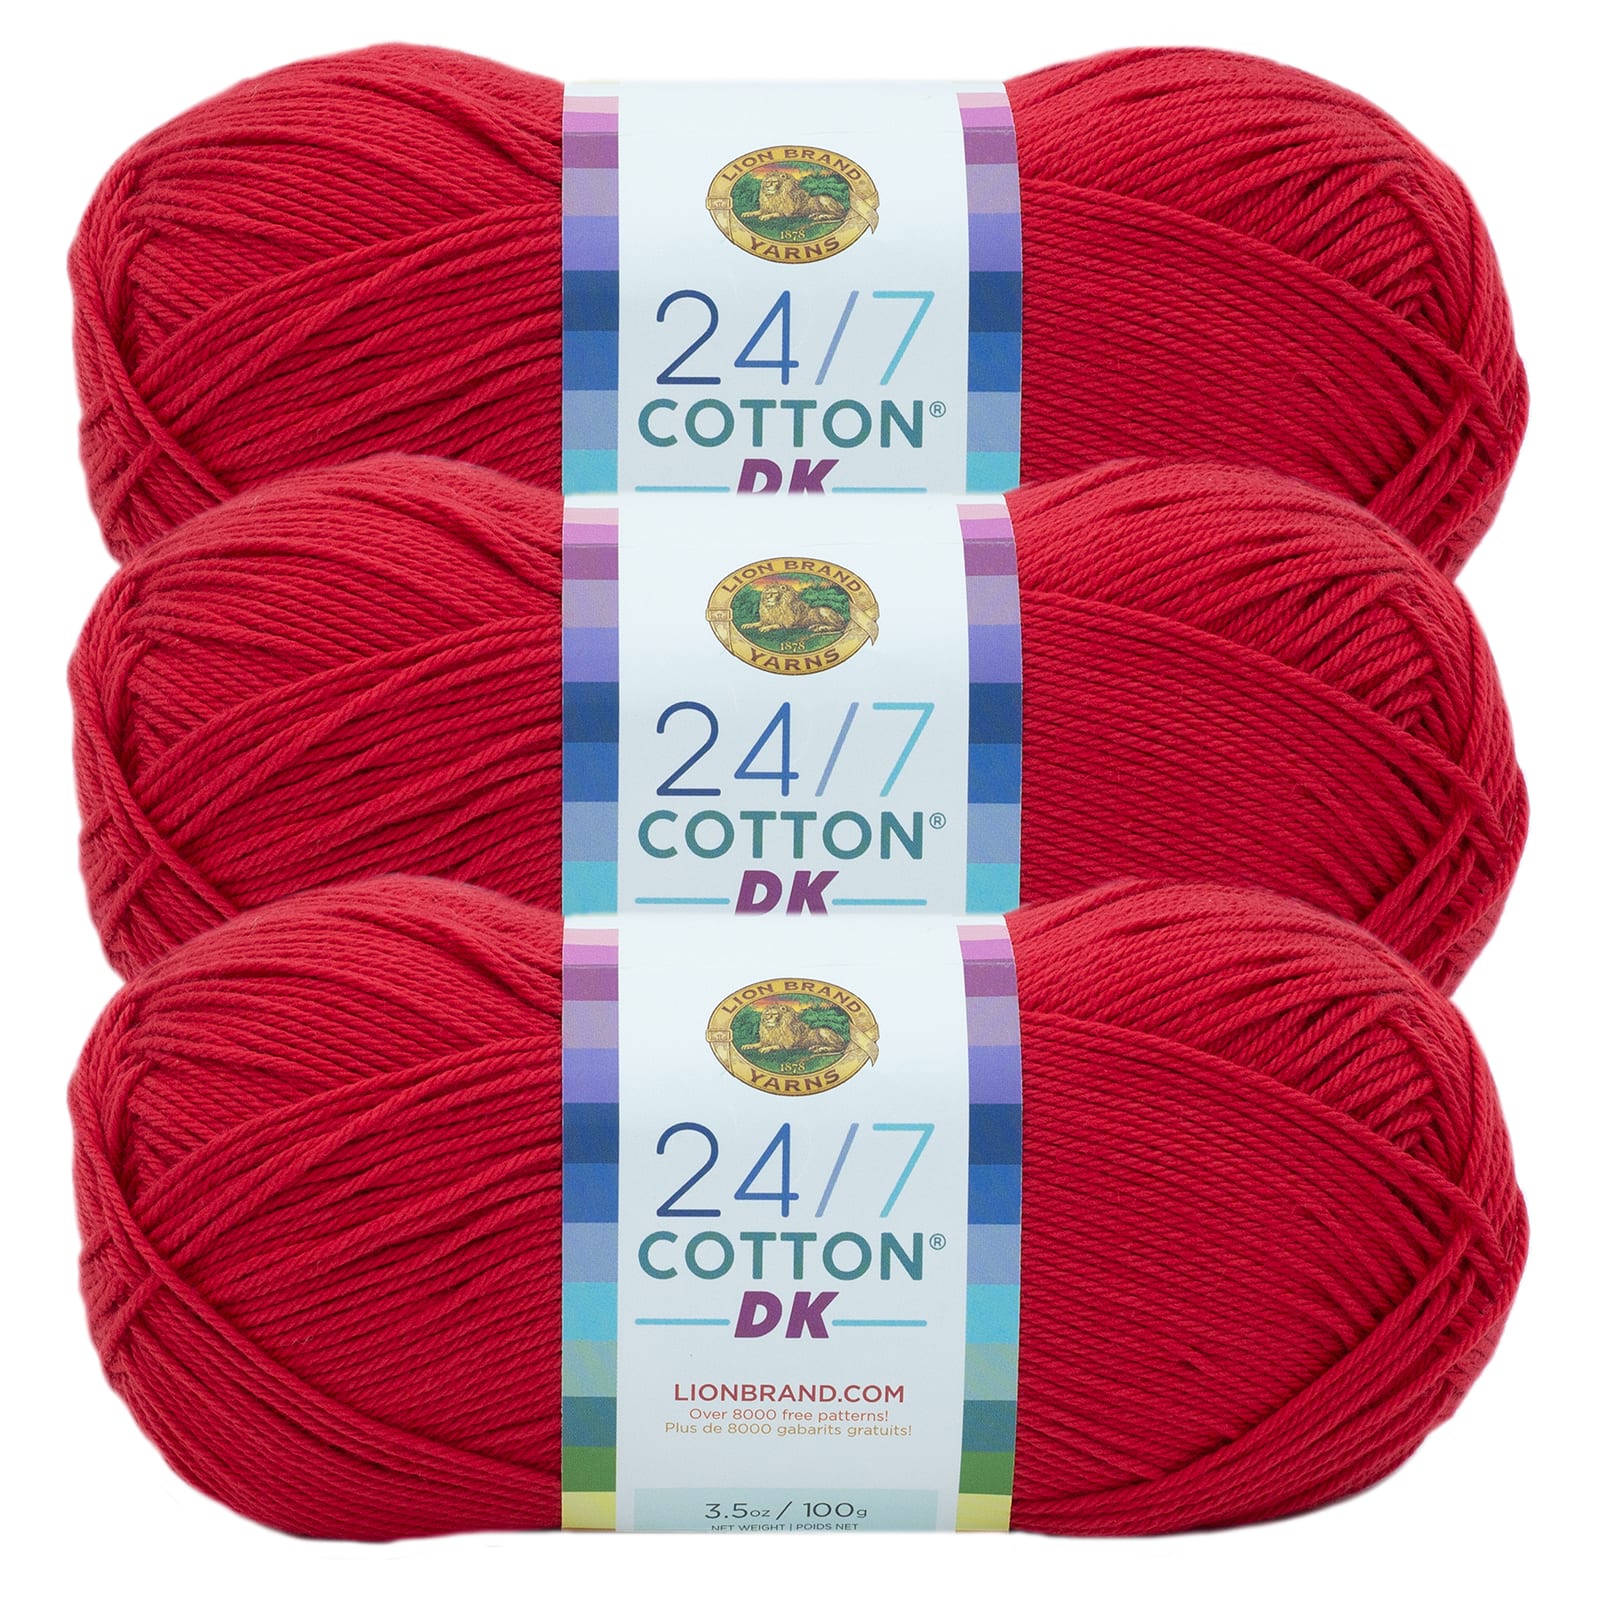 Lion Brand Yarn 24/7 Cotton Dk Grenadine Light Cotton Red Yarn 3 Pack